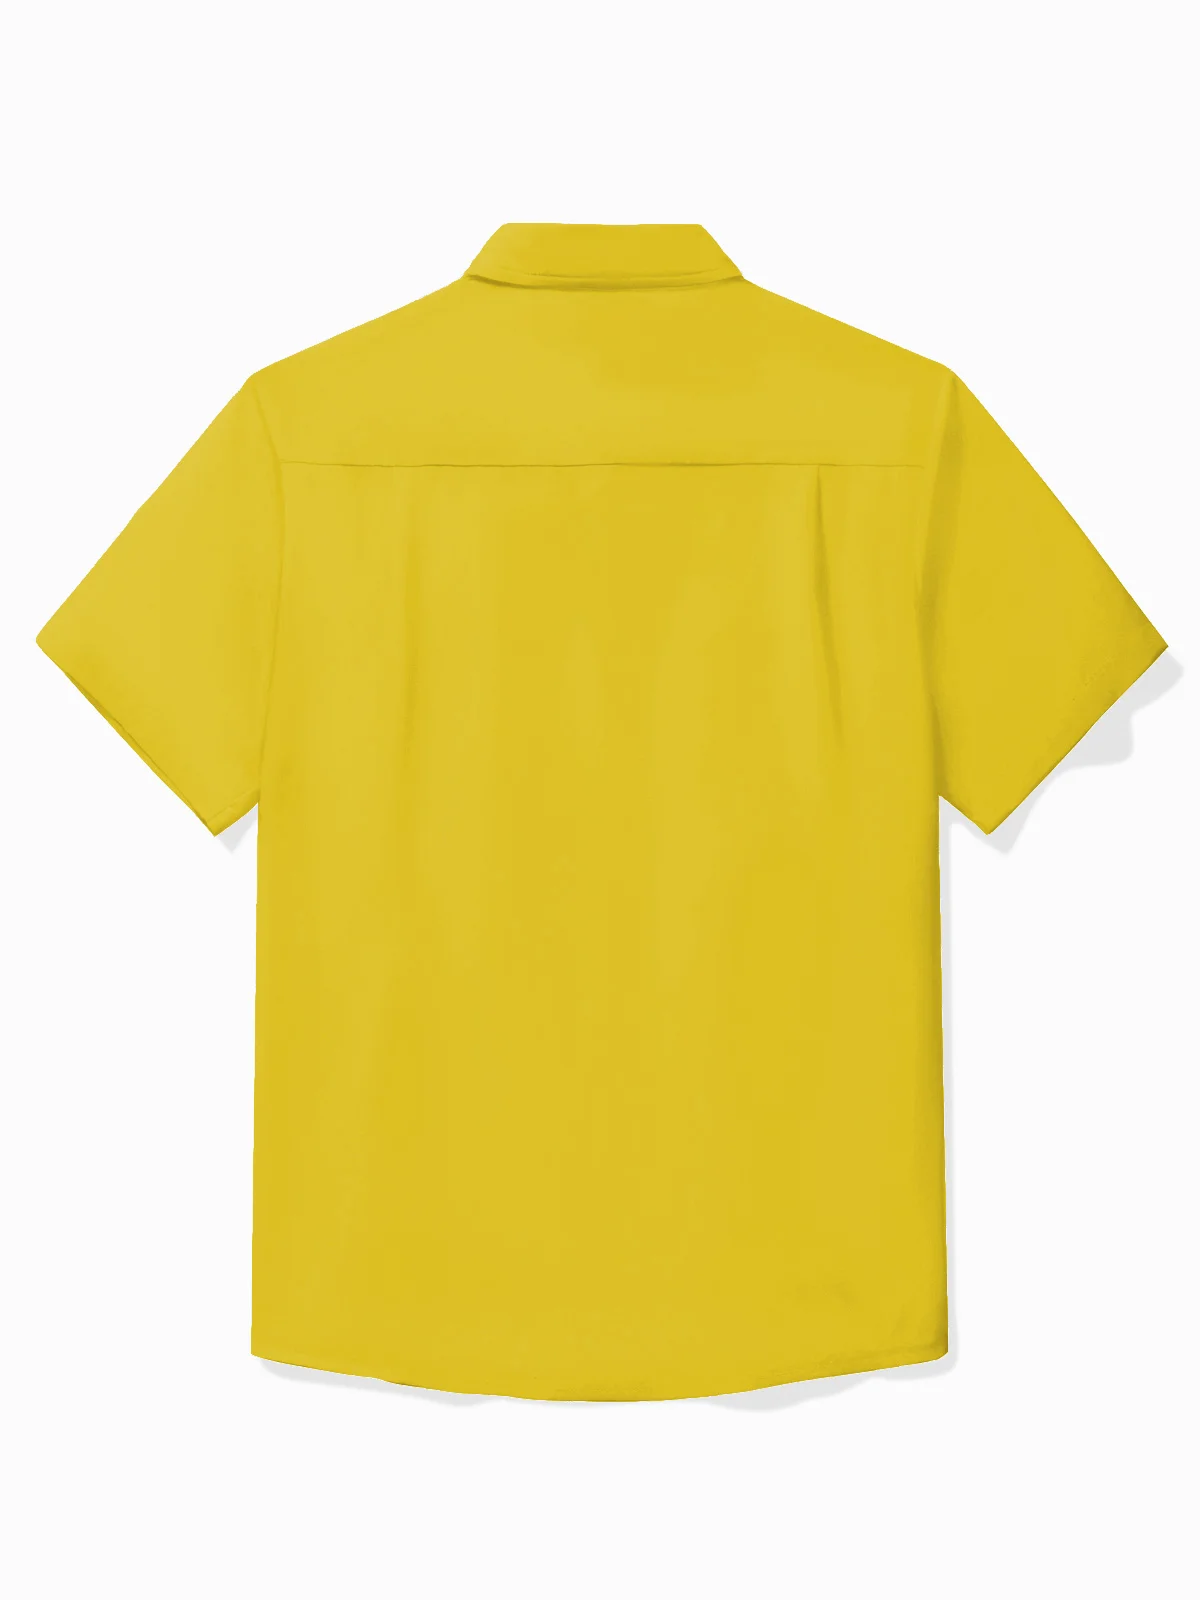 Royaura® Vintage Pinstripe flying eyeball Red Duck Panel BowLing Printed Chest Pocket Shirt Large Size Men's Shirt